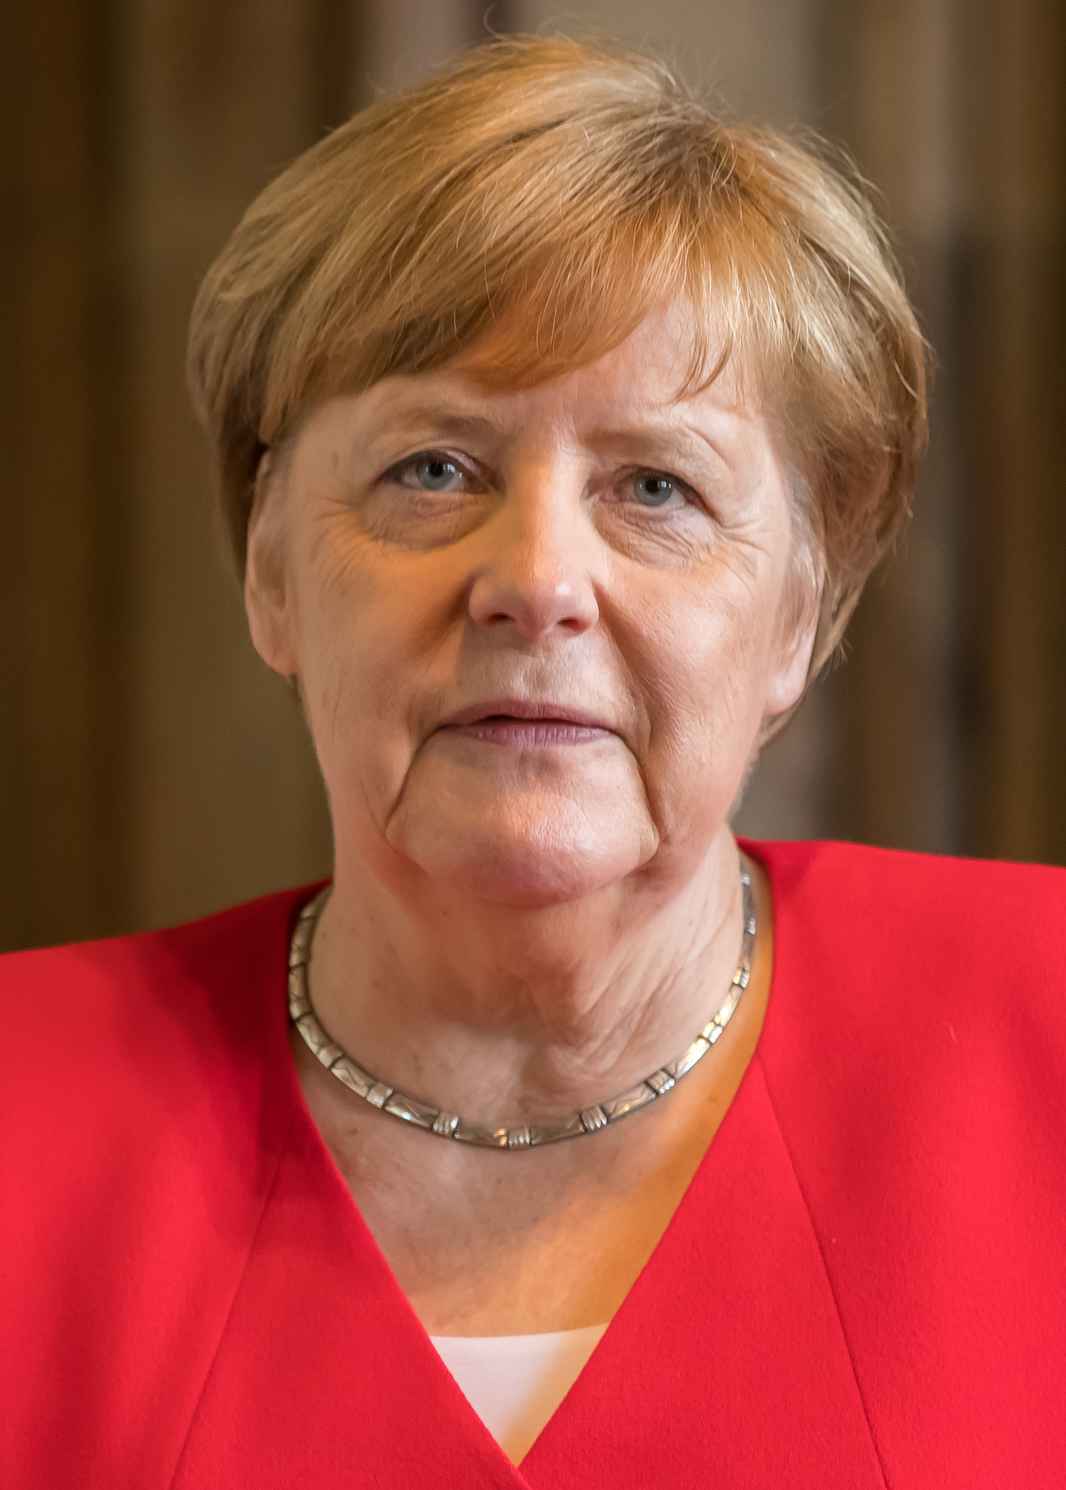 Angela_Merkel_jackofclubs